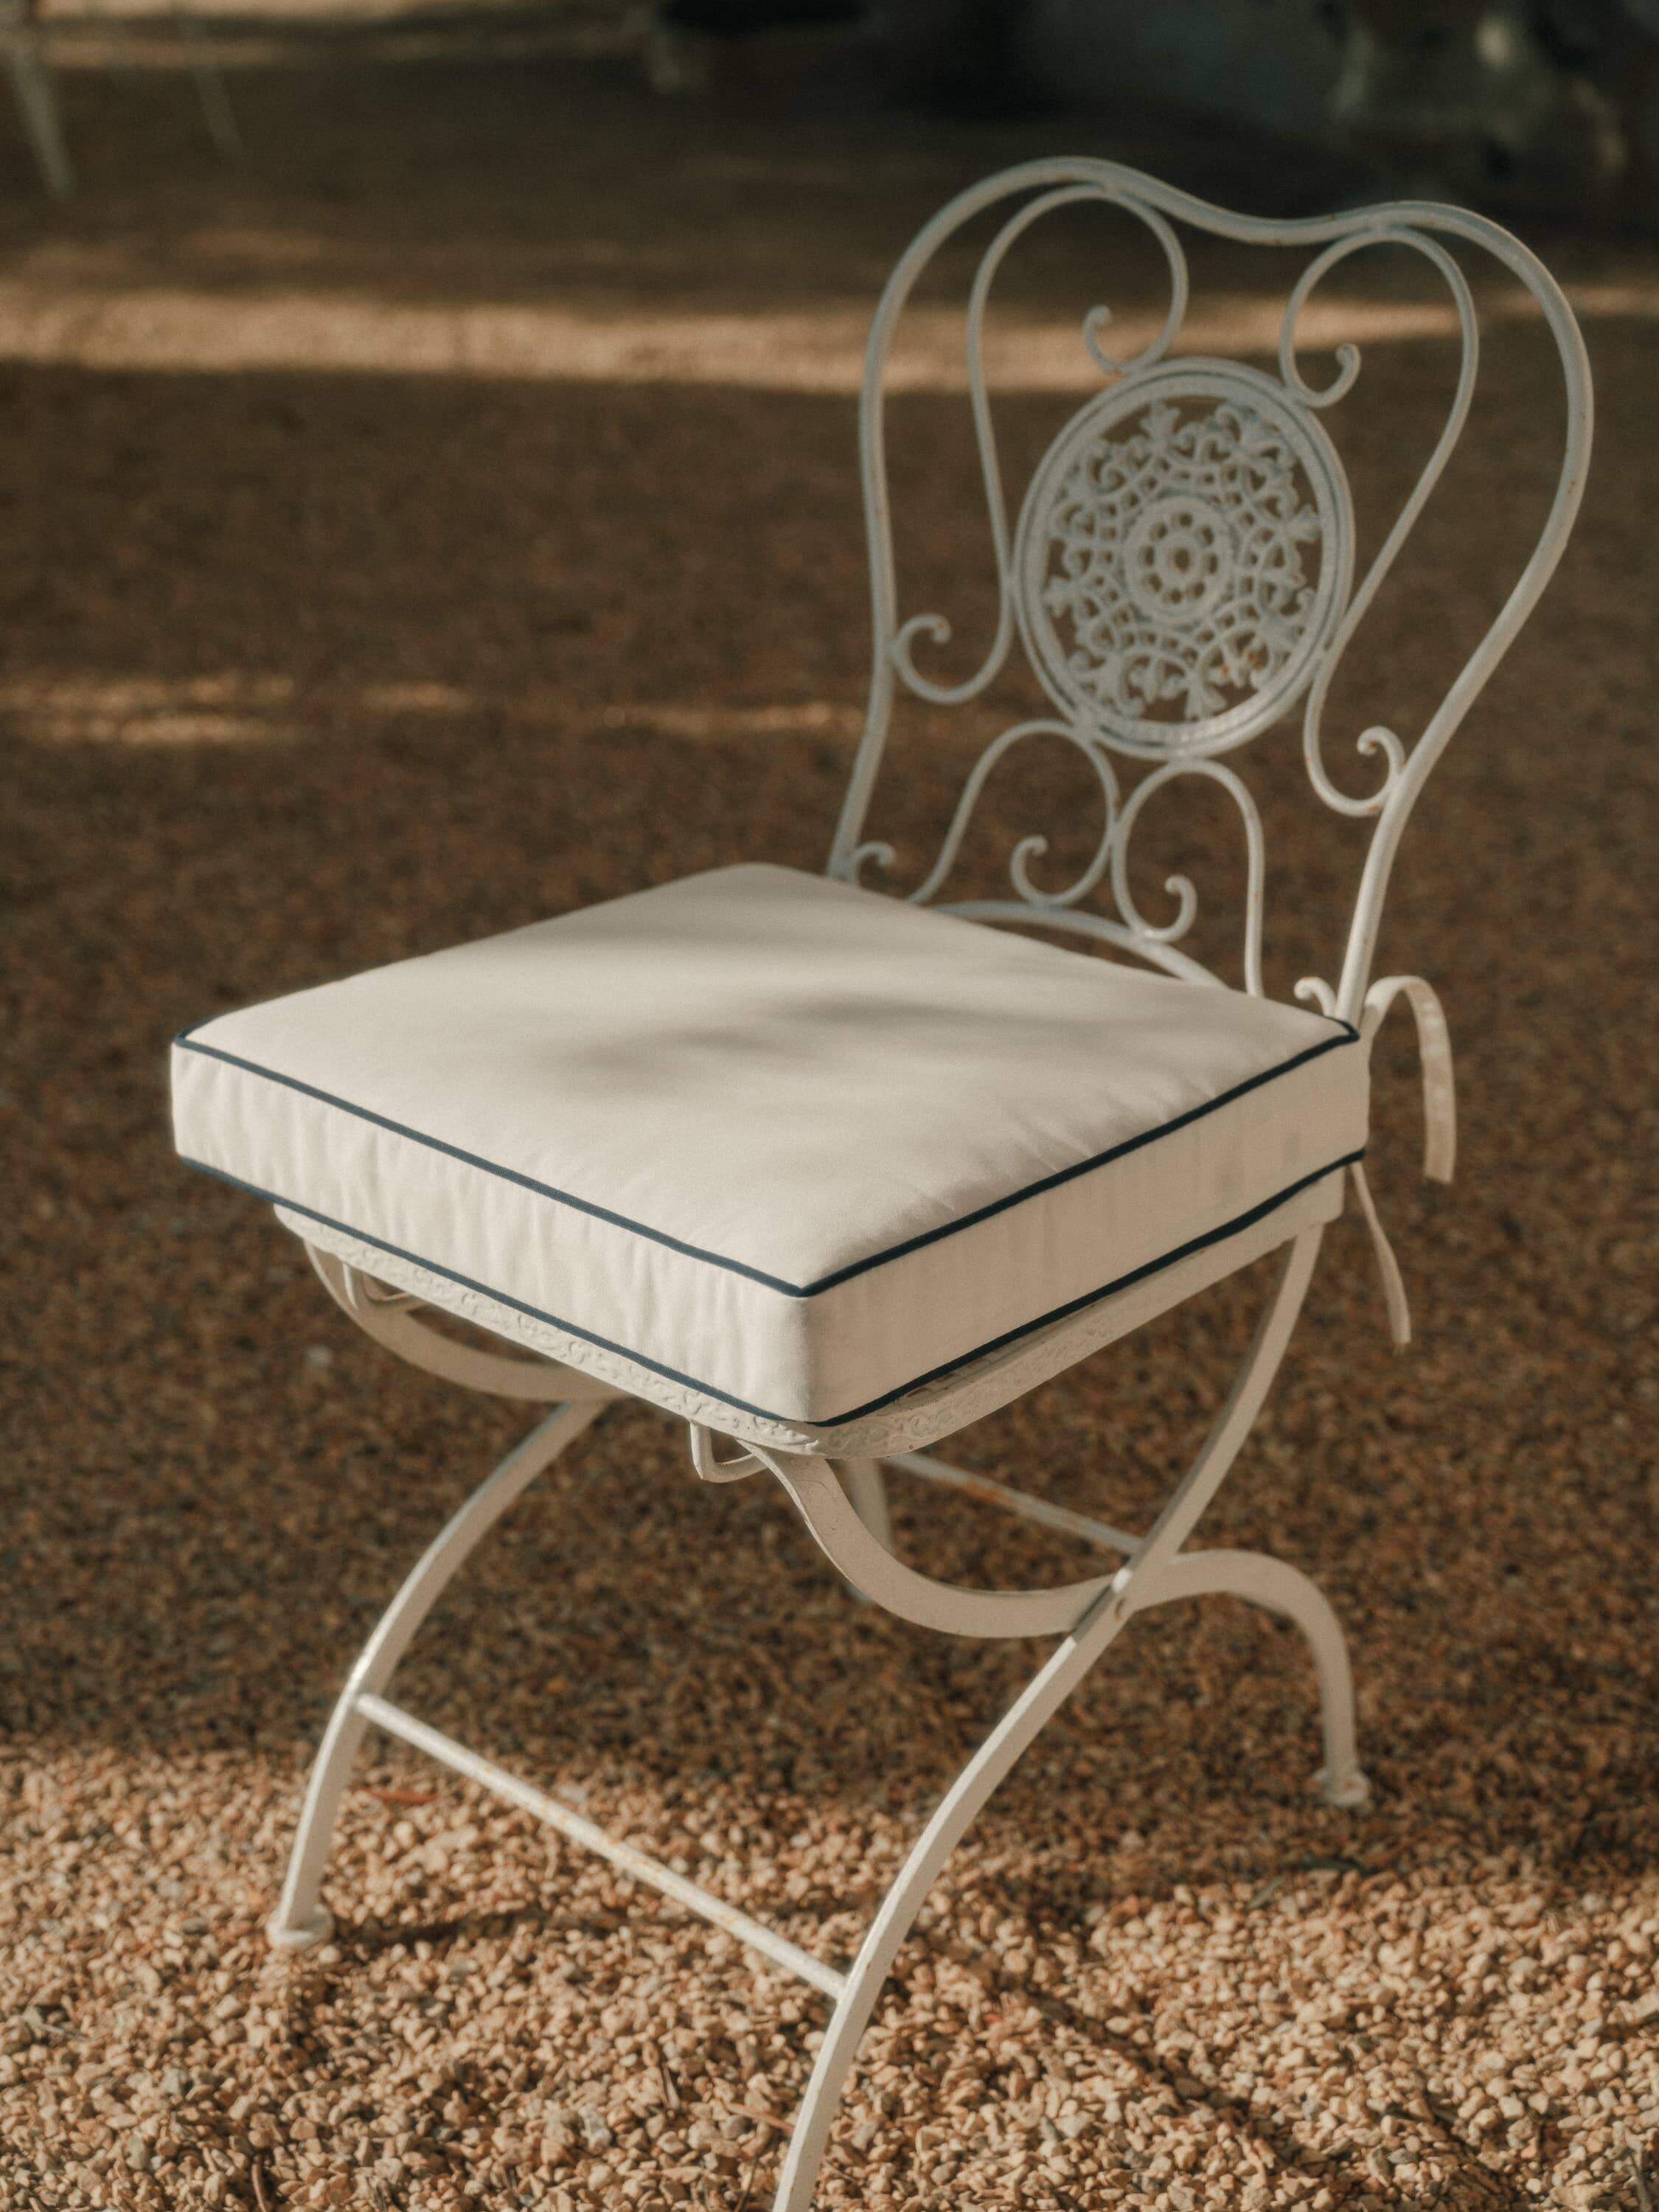 white seat pillow on metal frame chair